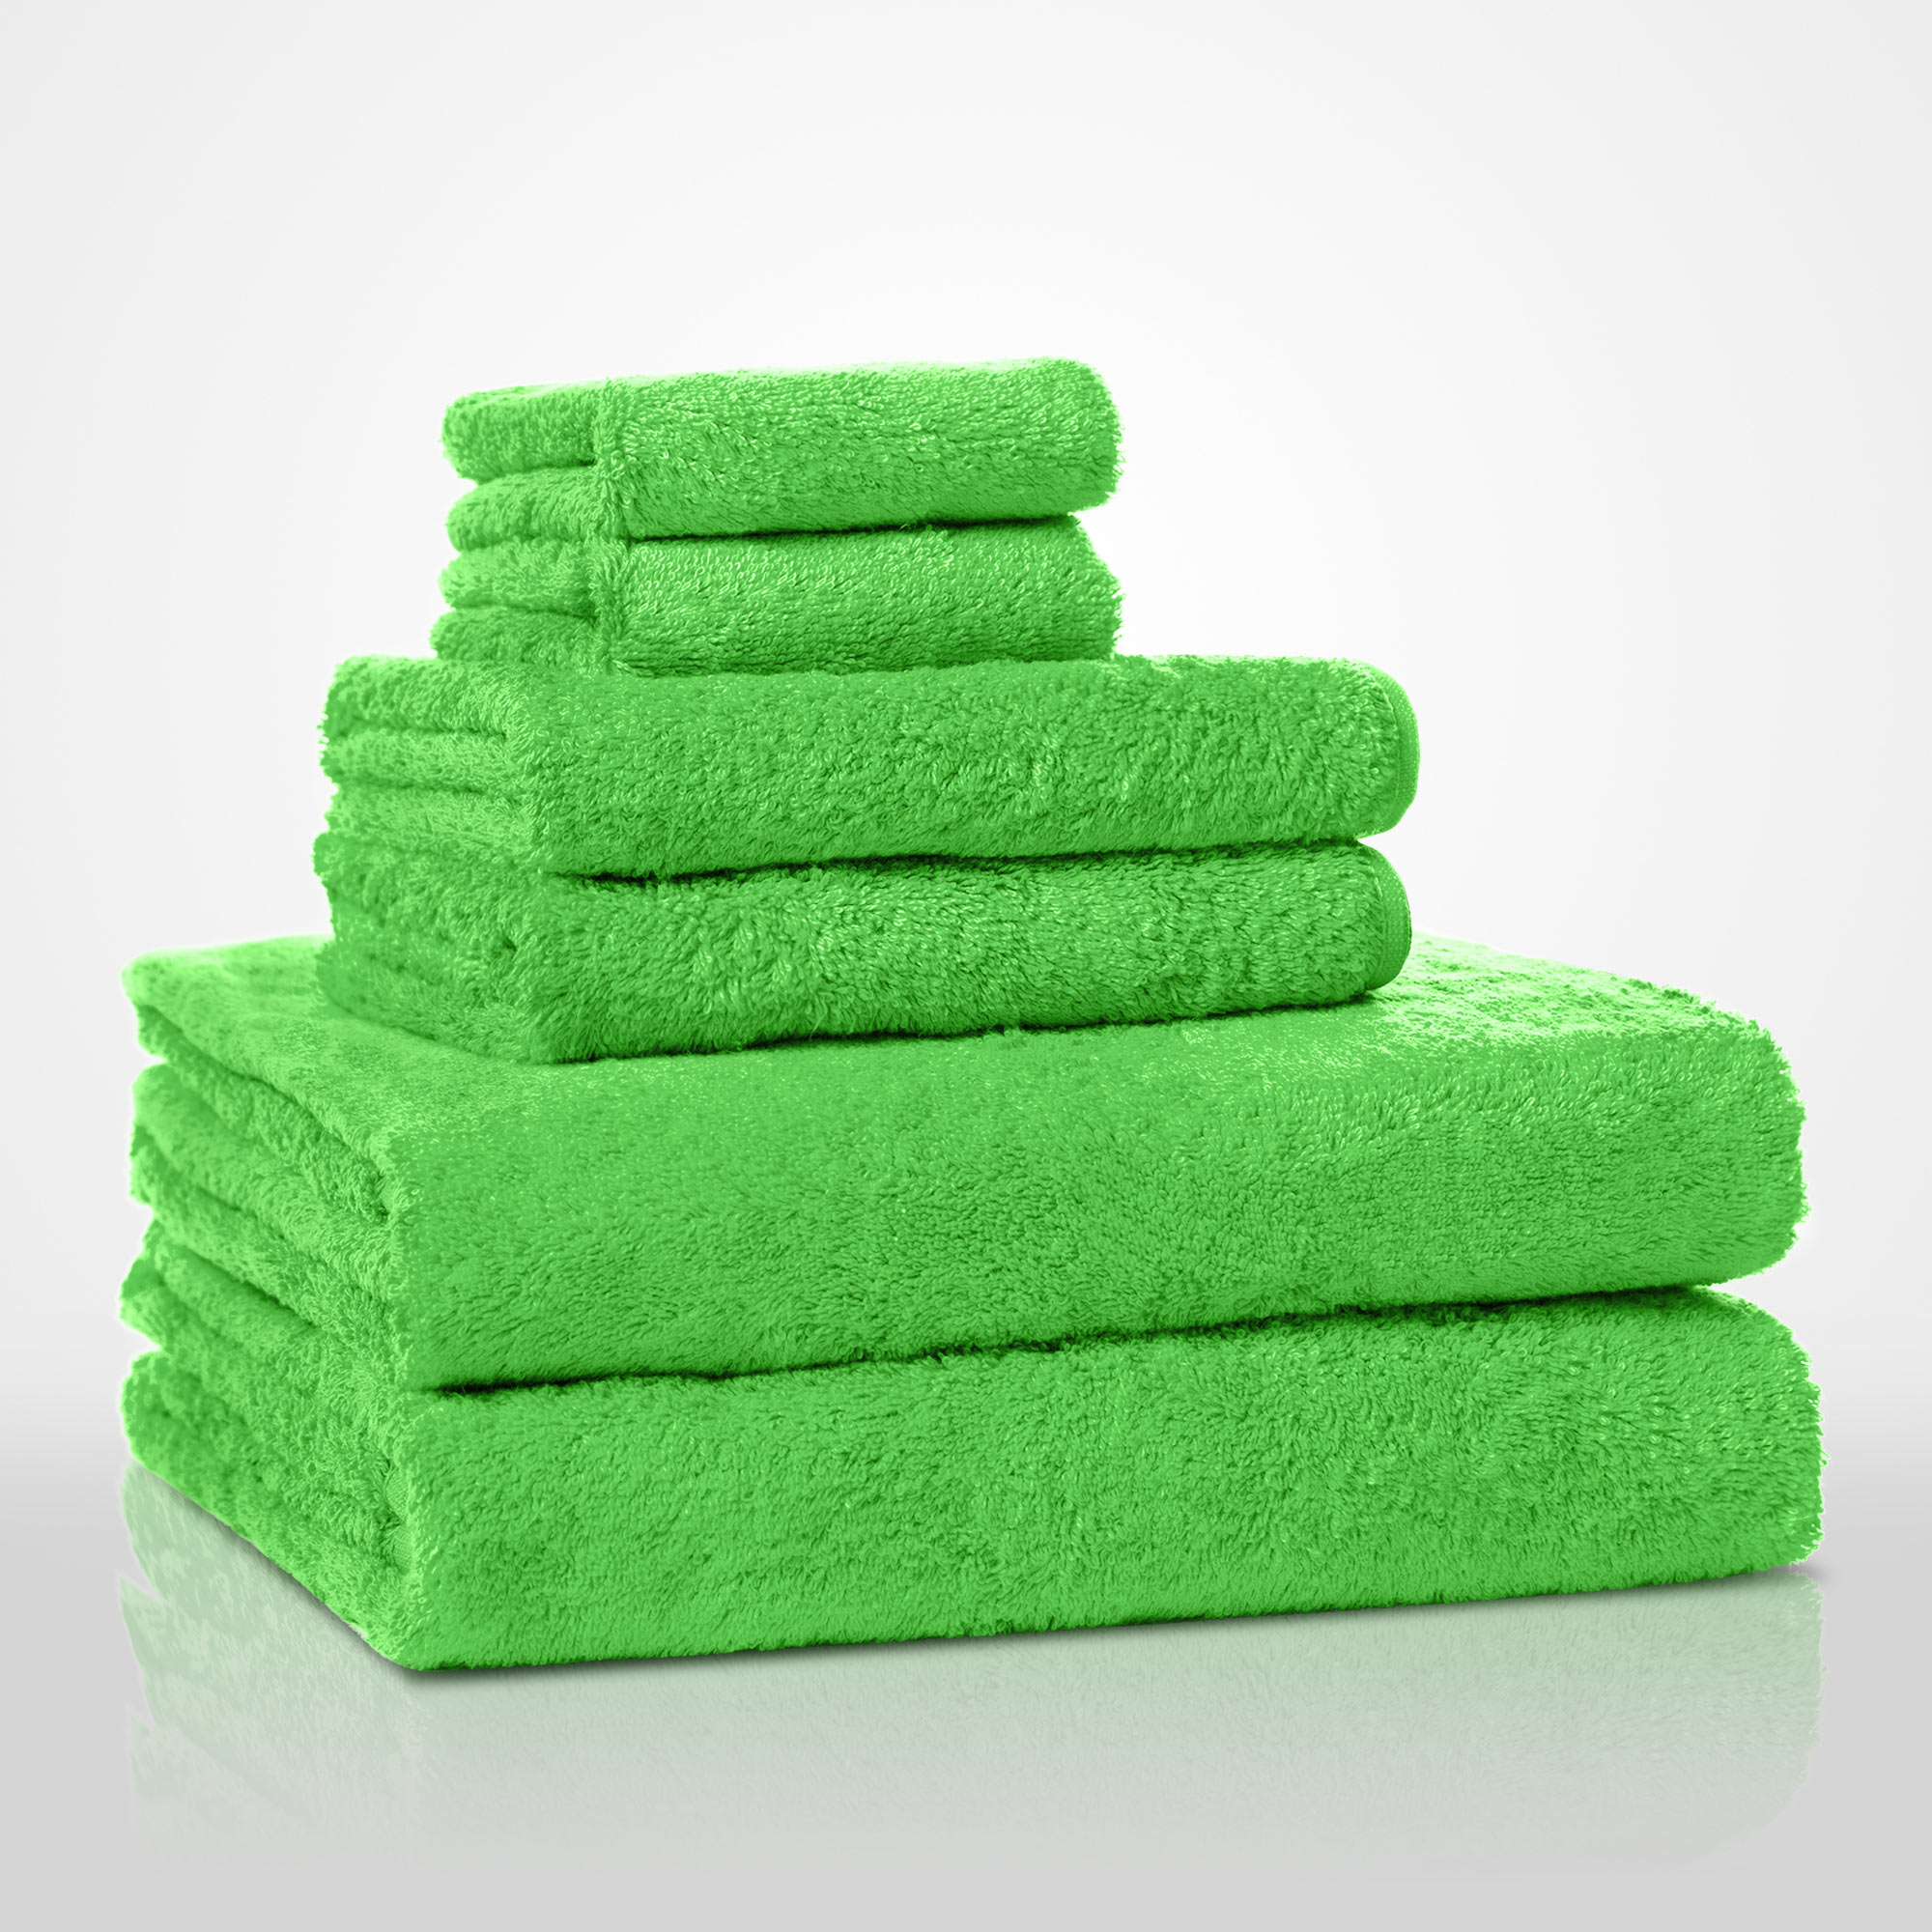 35"x 60" - 100% Turkish Cotton Lime Green Terry Bath Towel-Robemart.com